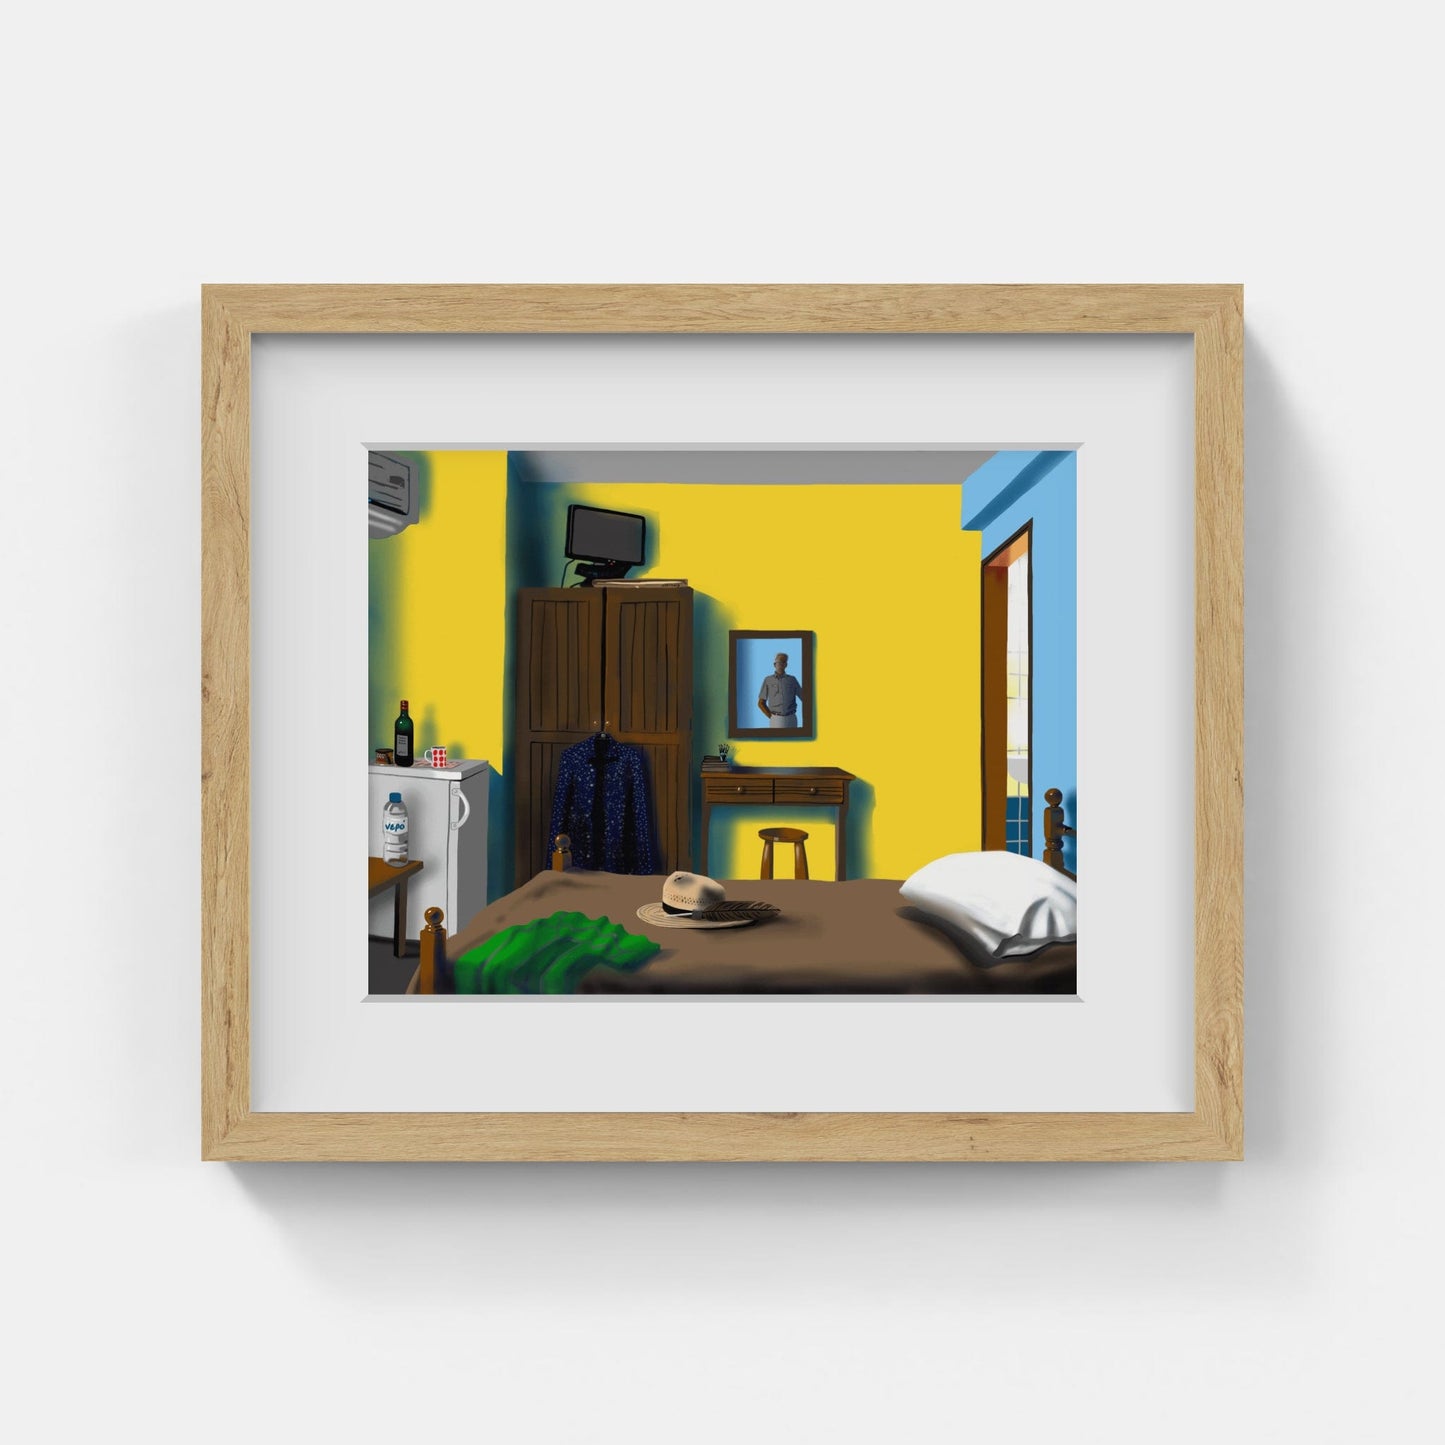 Peter Sternäng - Self portrait in Yellow Room